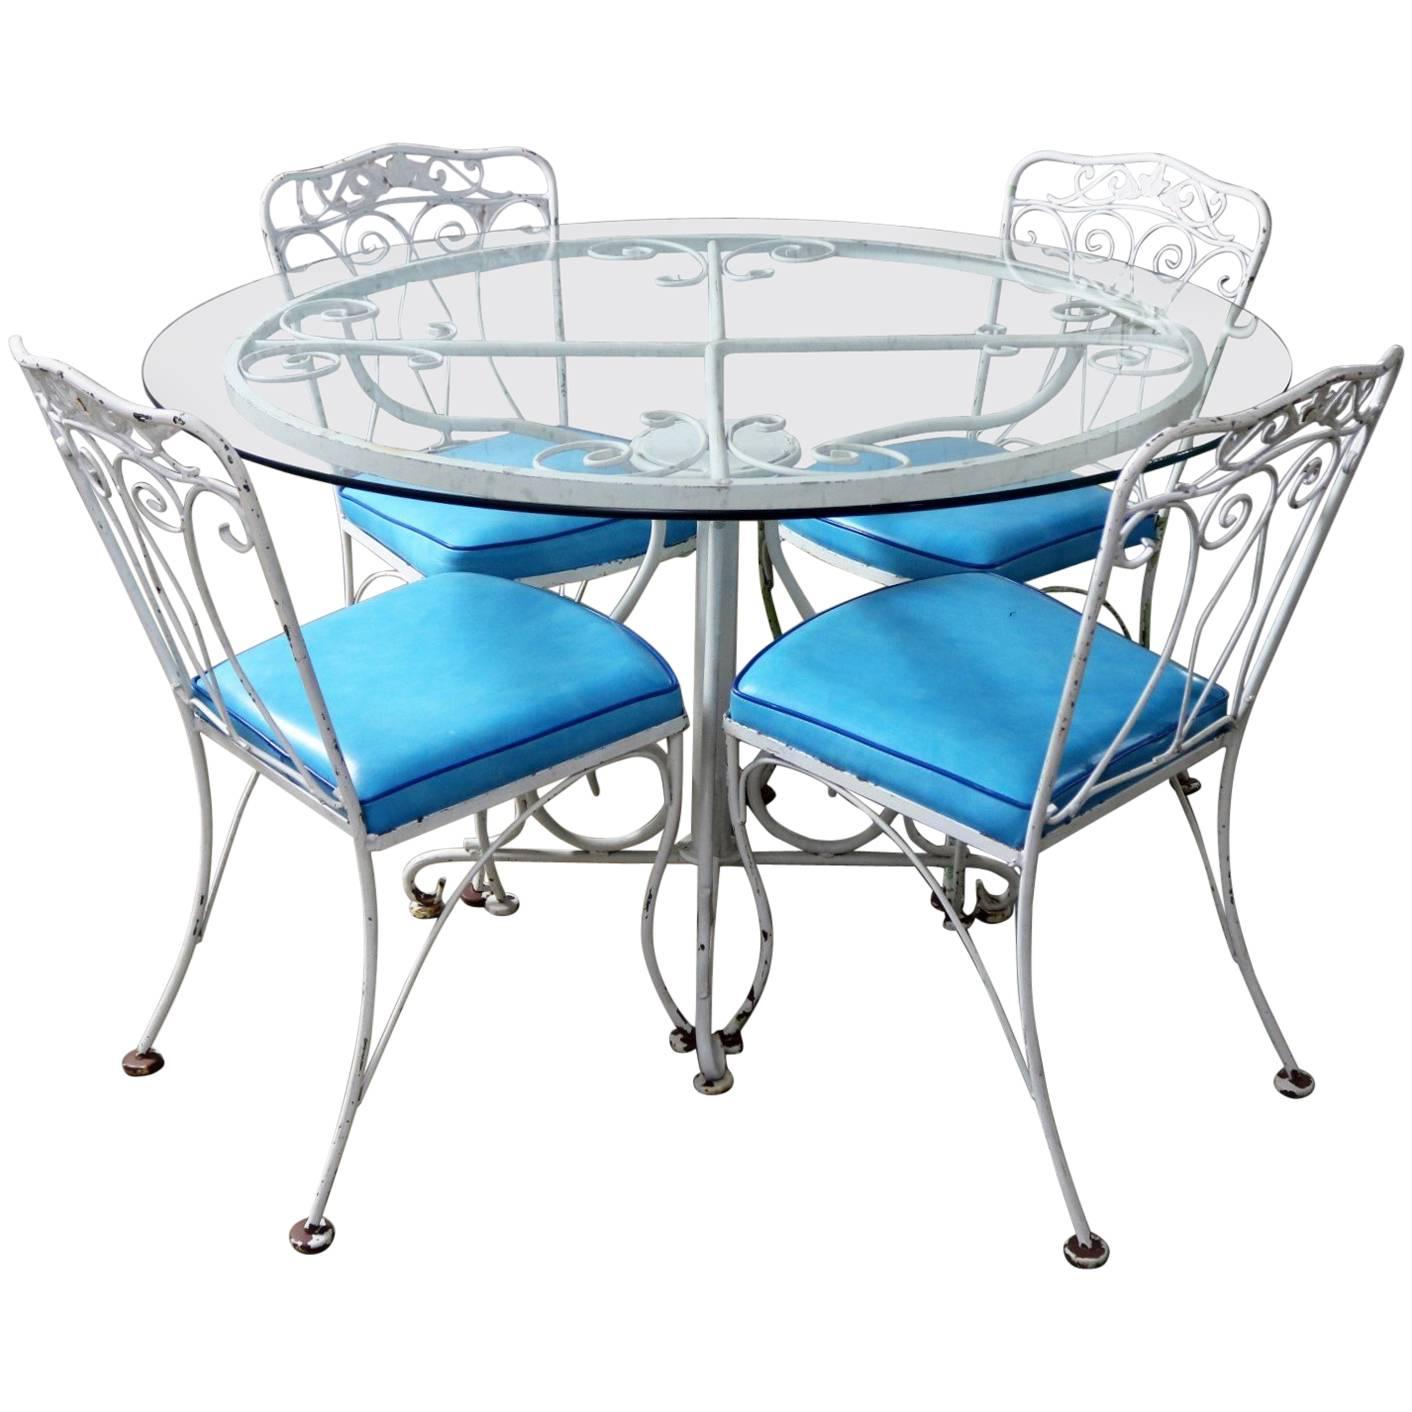 Salterini Style Wrought Iron Patio Set Round Table Four Chairs Turquoise Seats